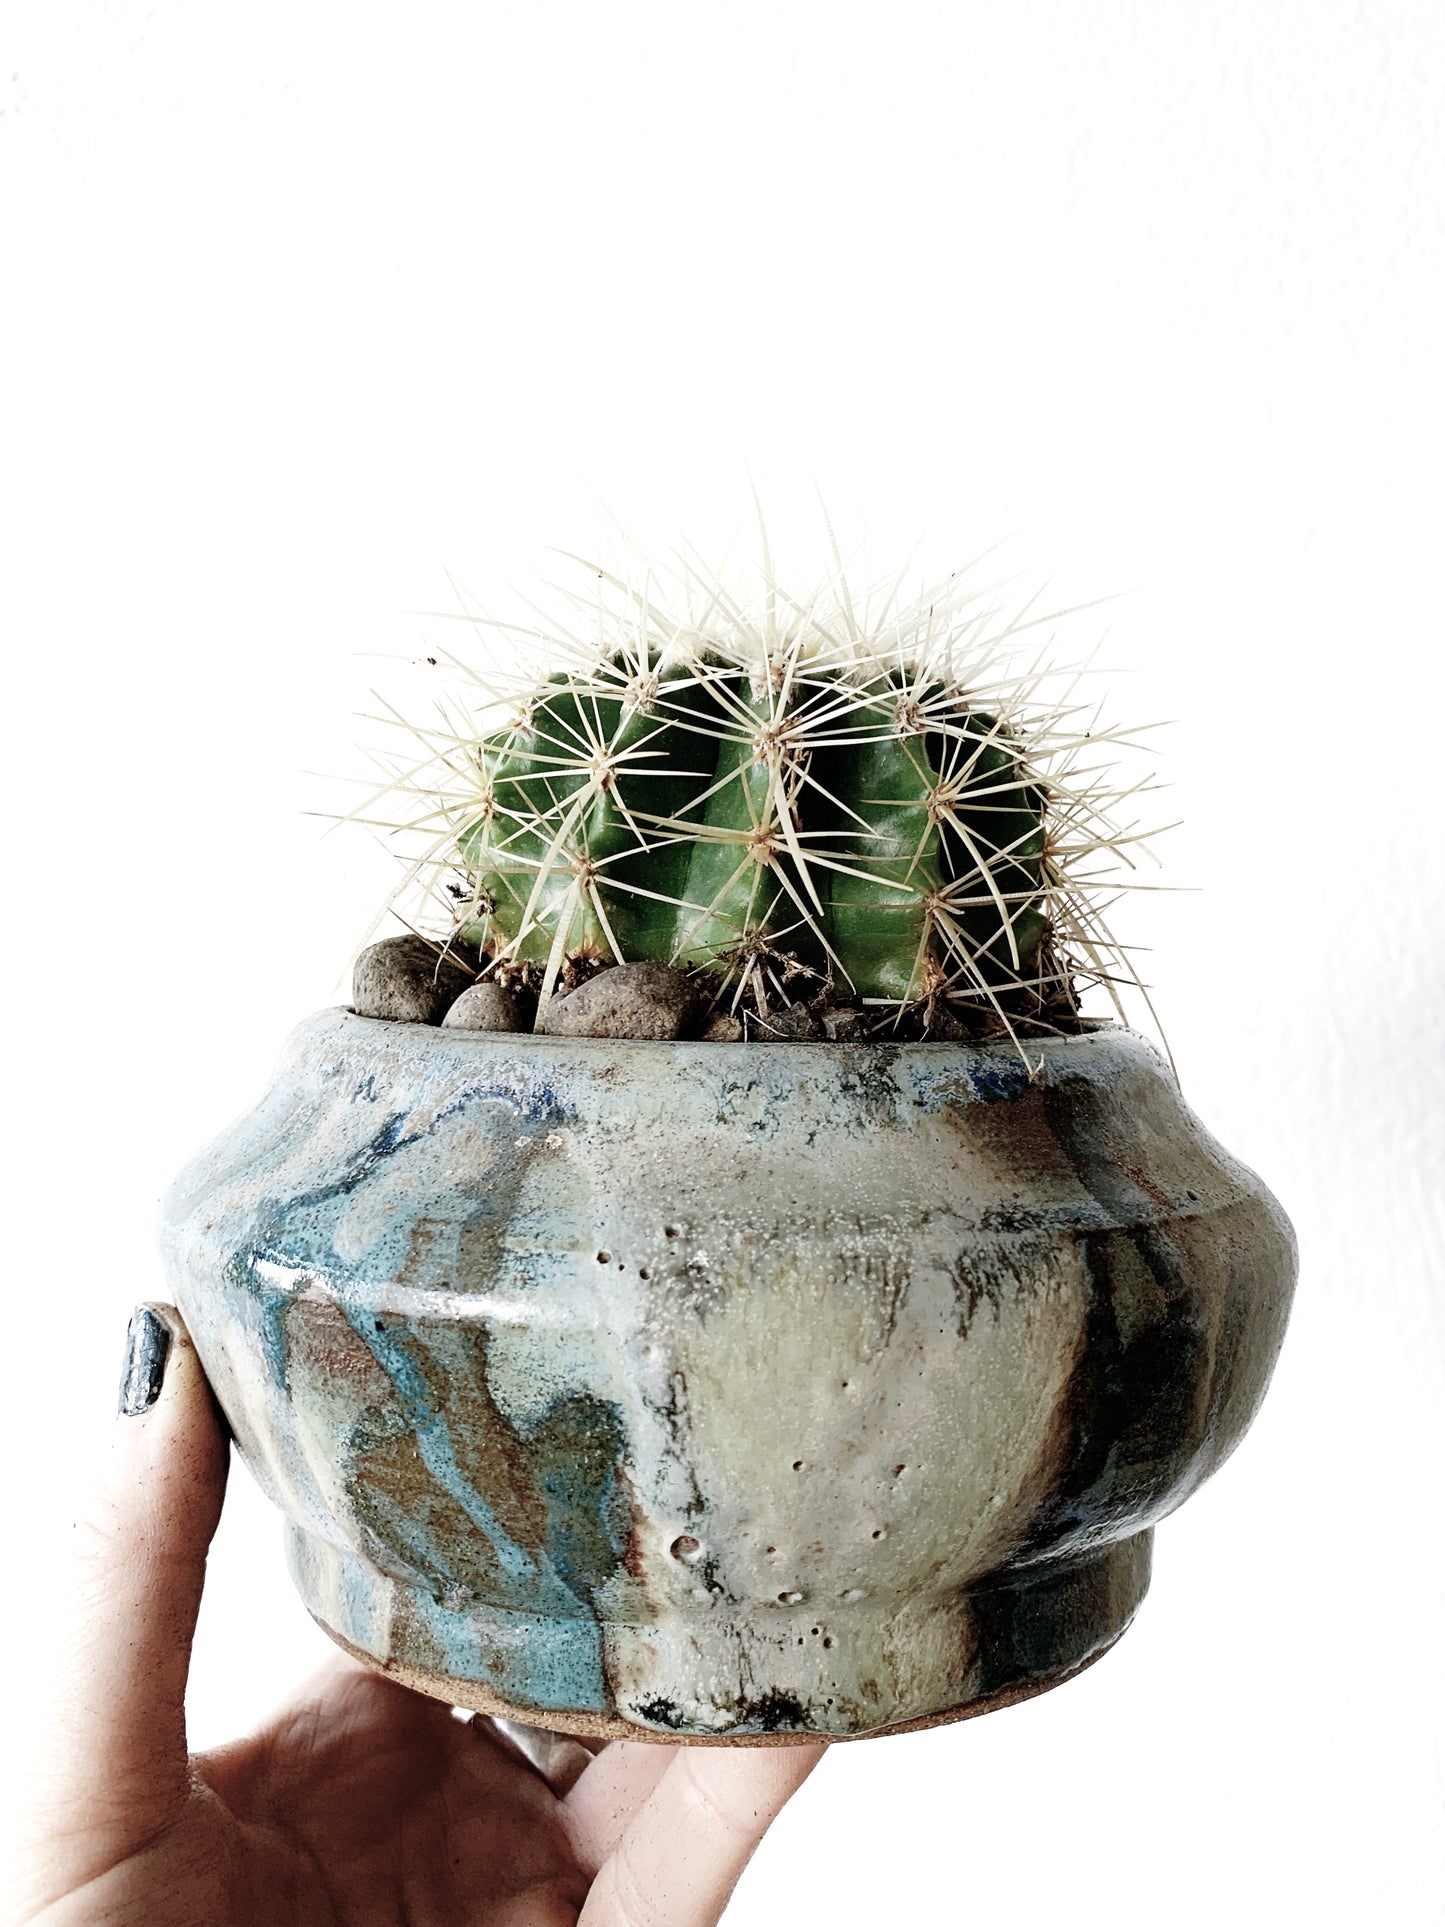 Potted Barrel Cactus